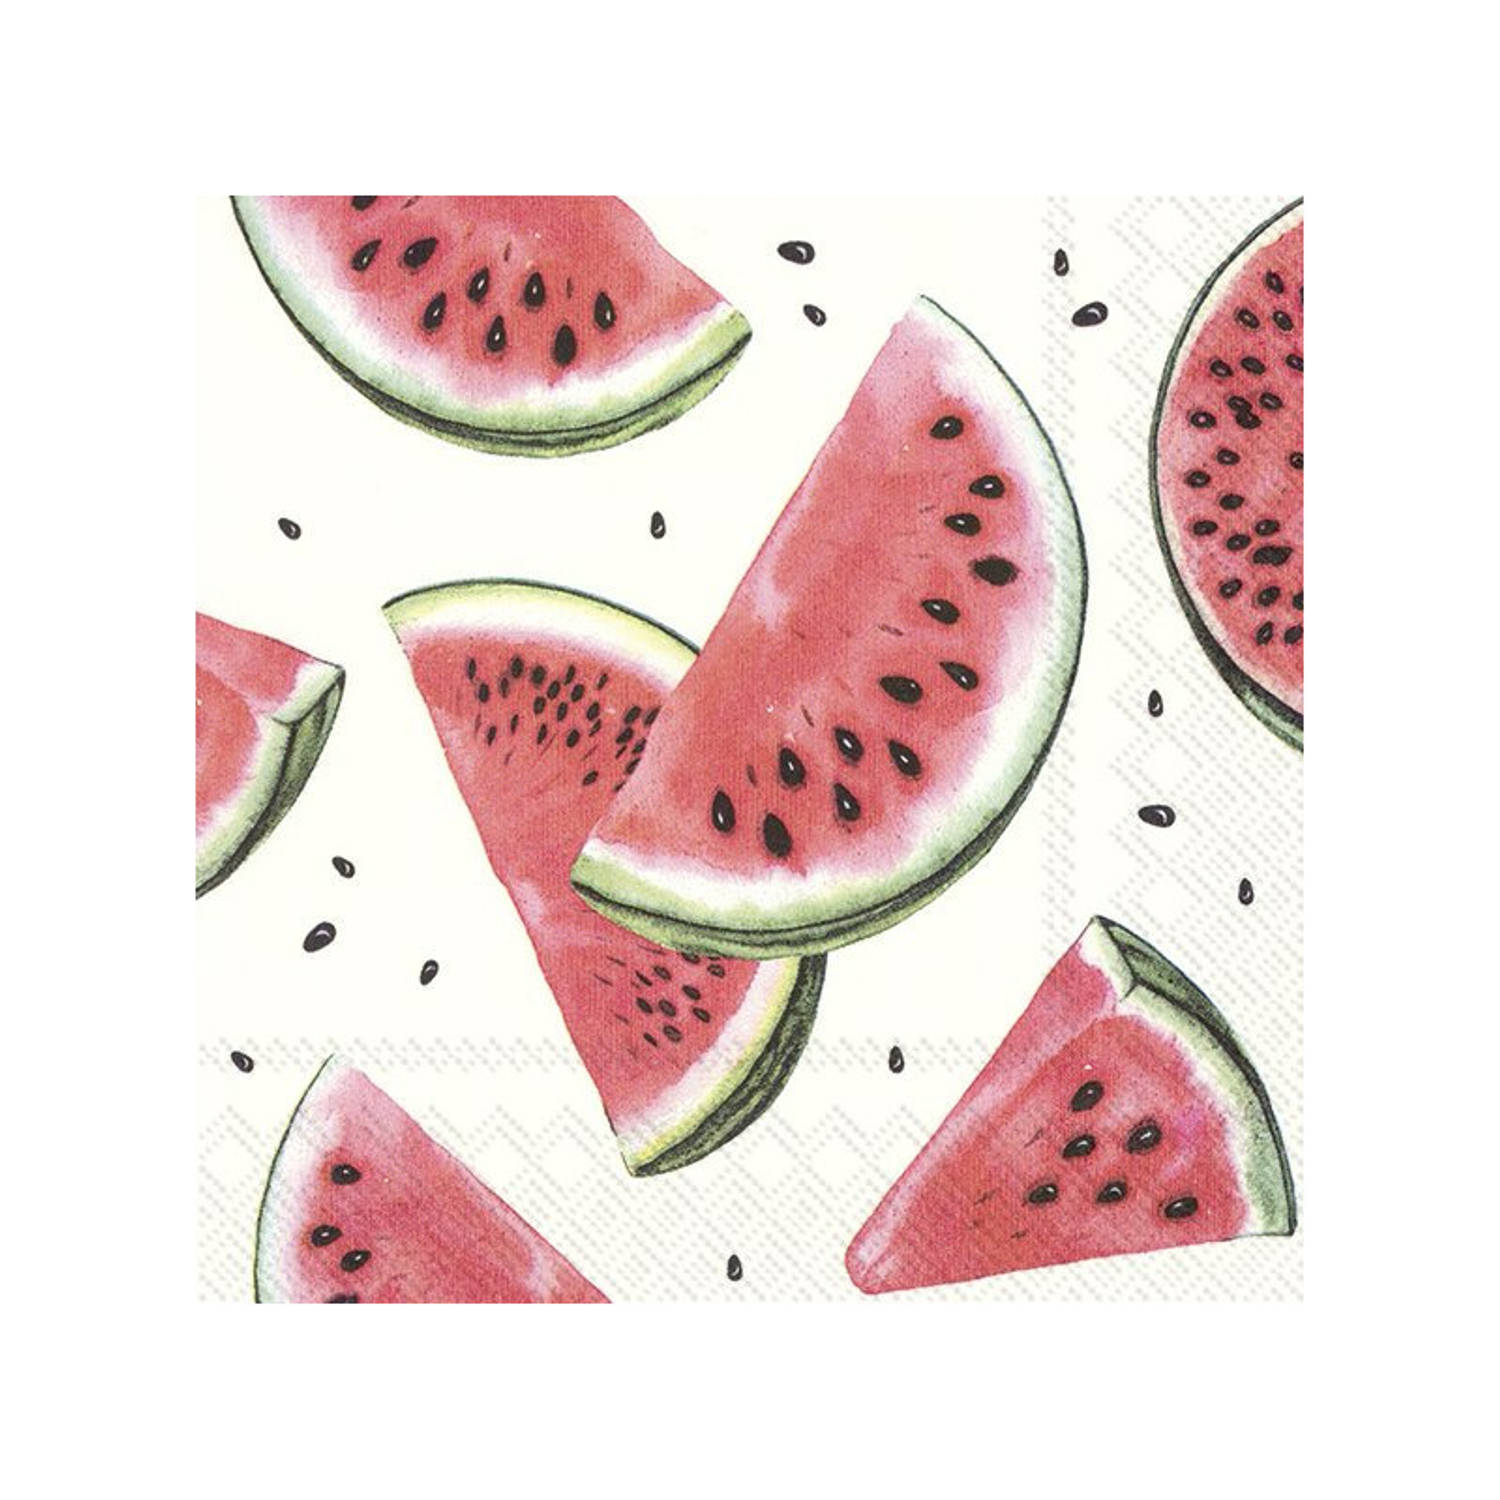 20x Tropische 3-laags servetten watermeloen 33 x 33 cm - Tropisch Hawaii thema